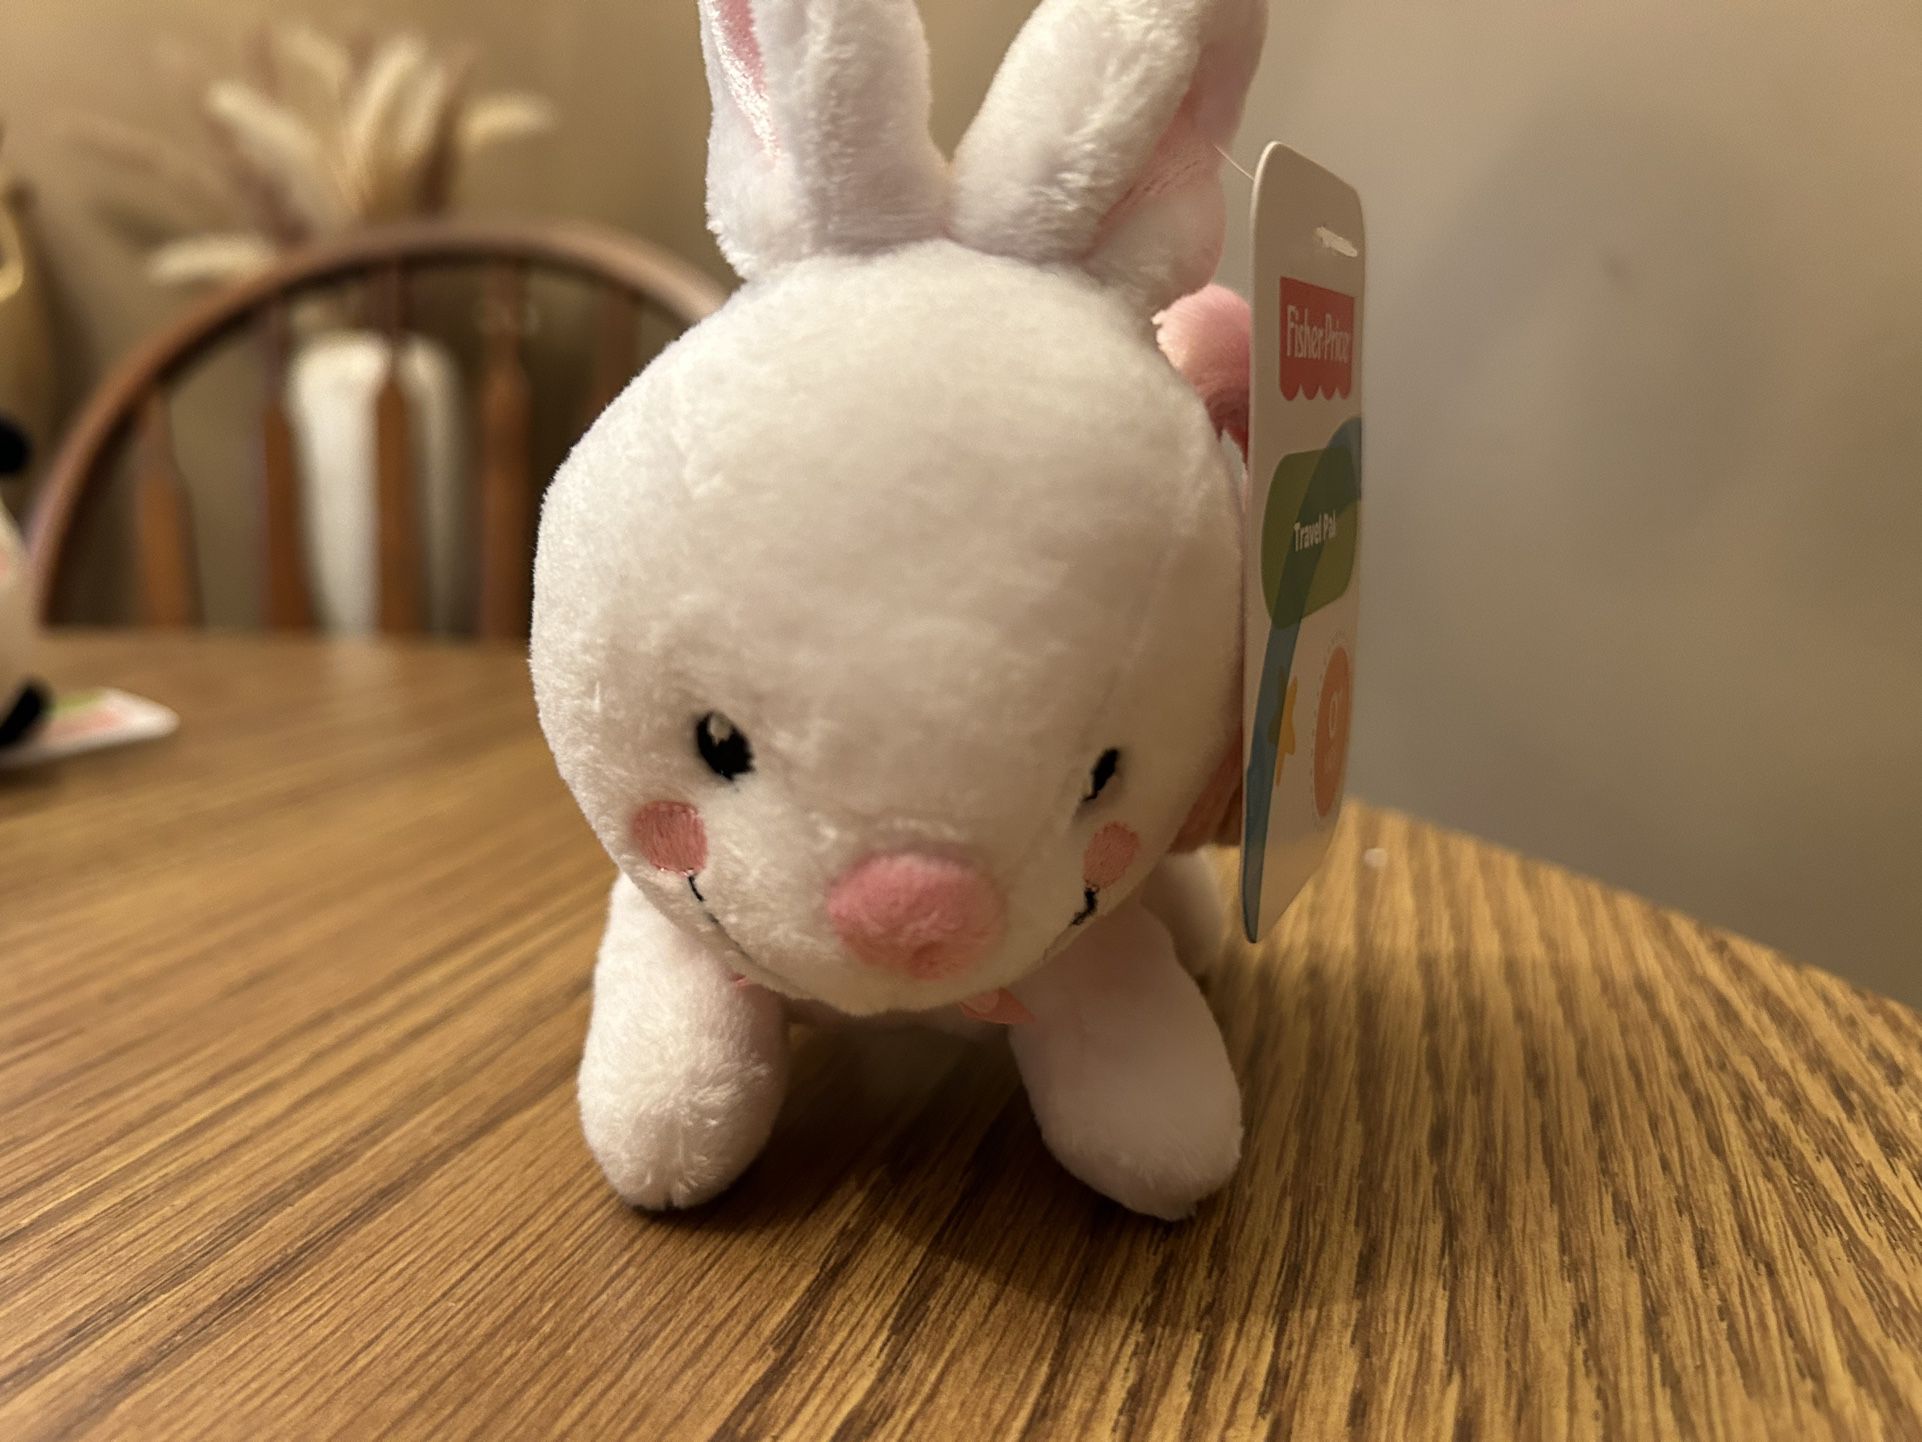 Fisher Price bunny rabbit plush Travel Pal  Baby Lovey Stuffed Animal NEW